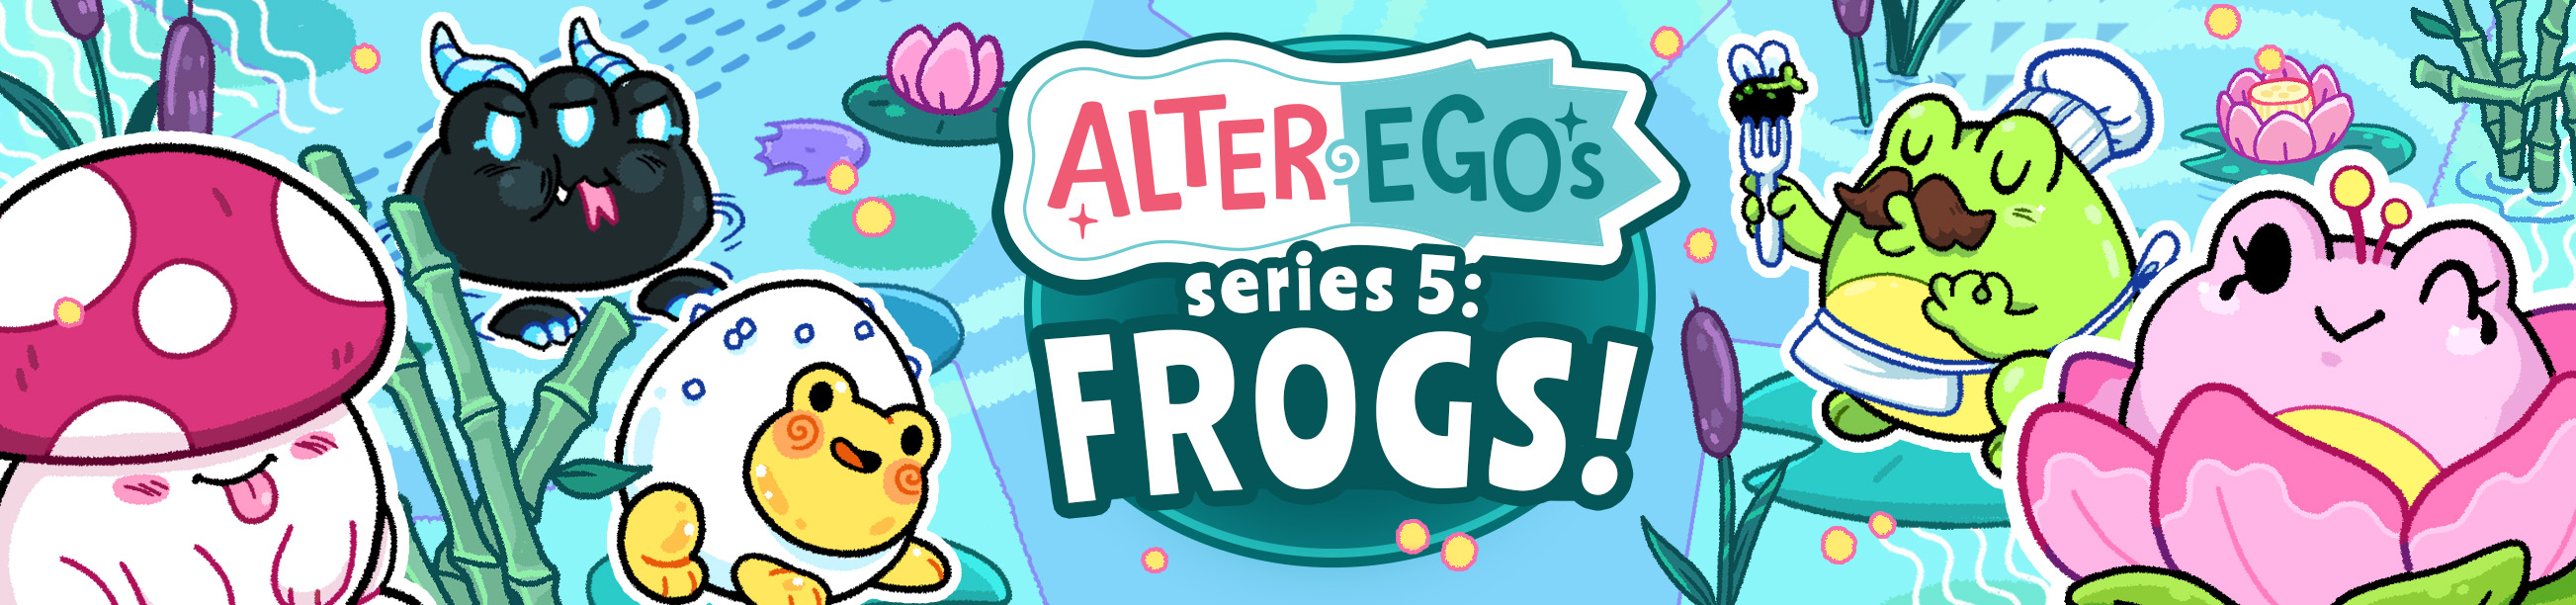 Alter Egos Coming Soon banner illustration